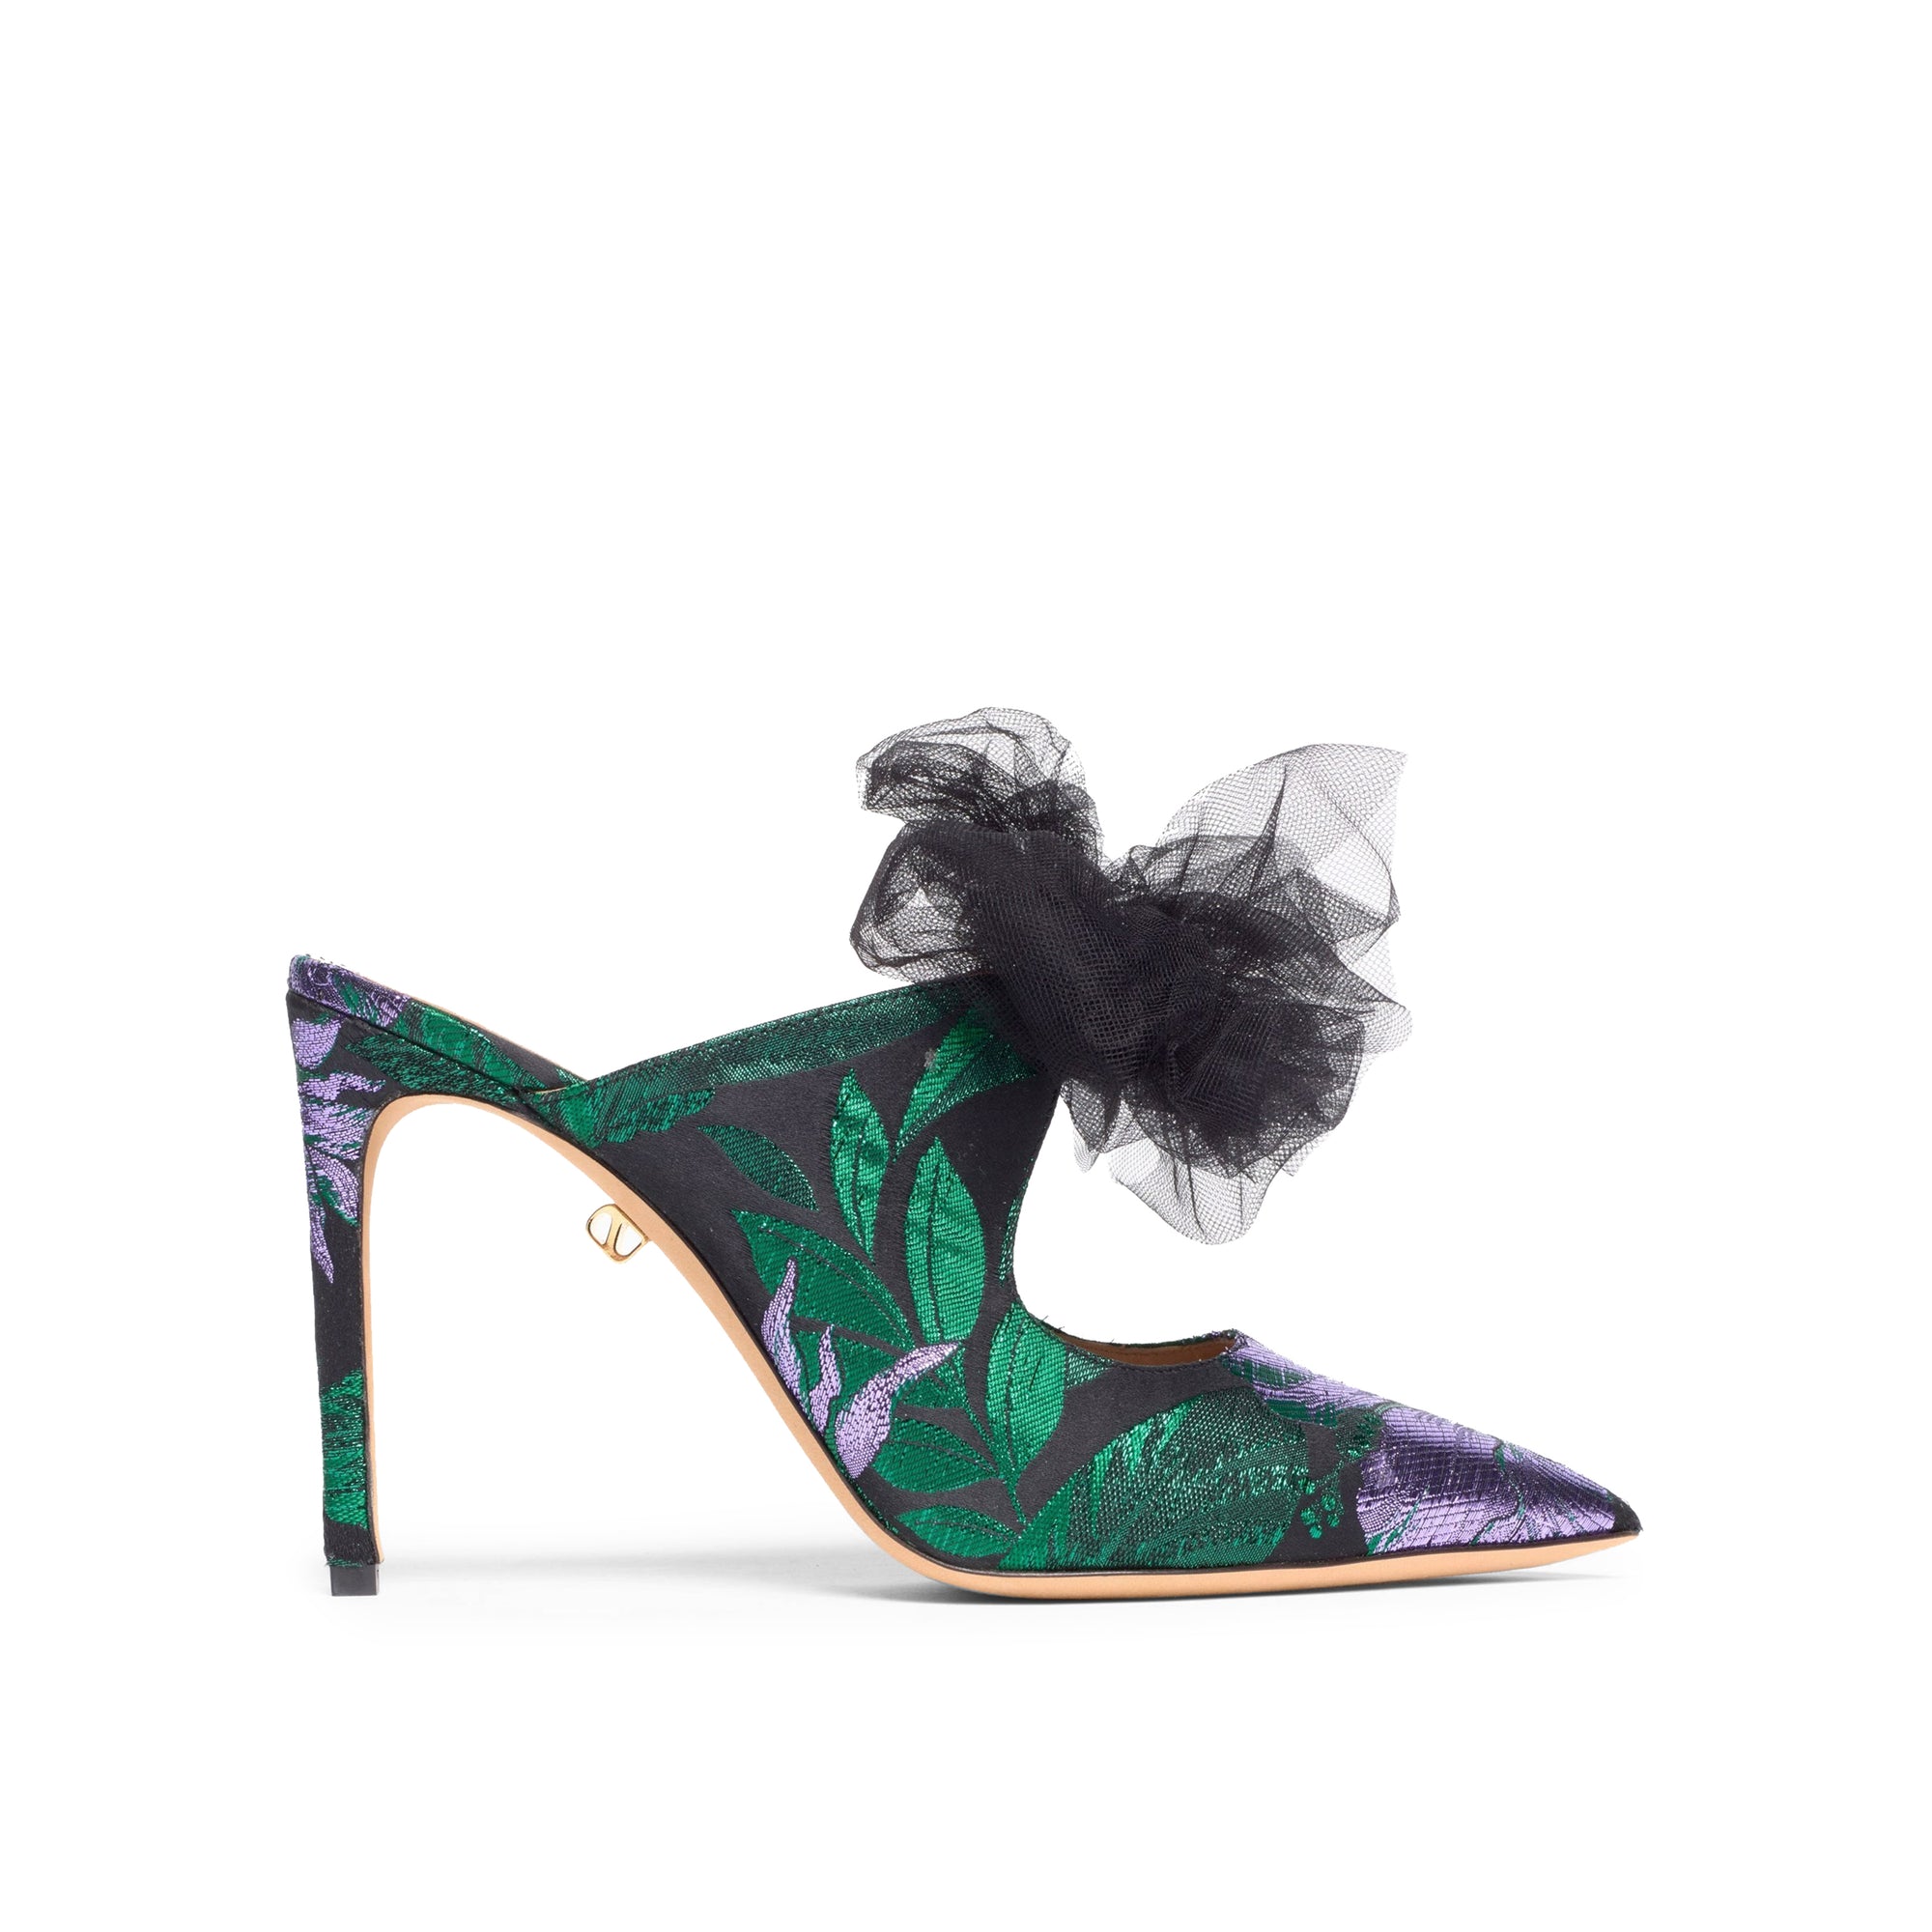 Ana 95 heeled mules in jacquard - Green